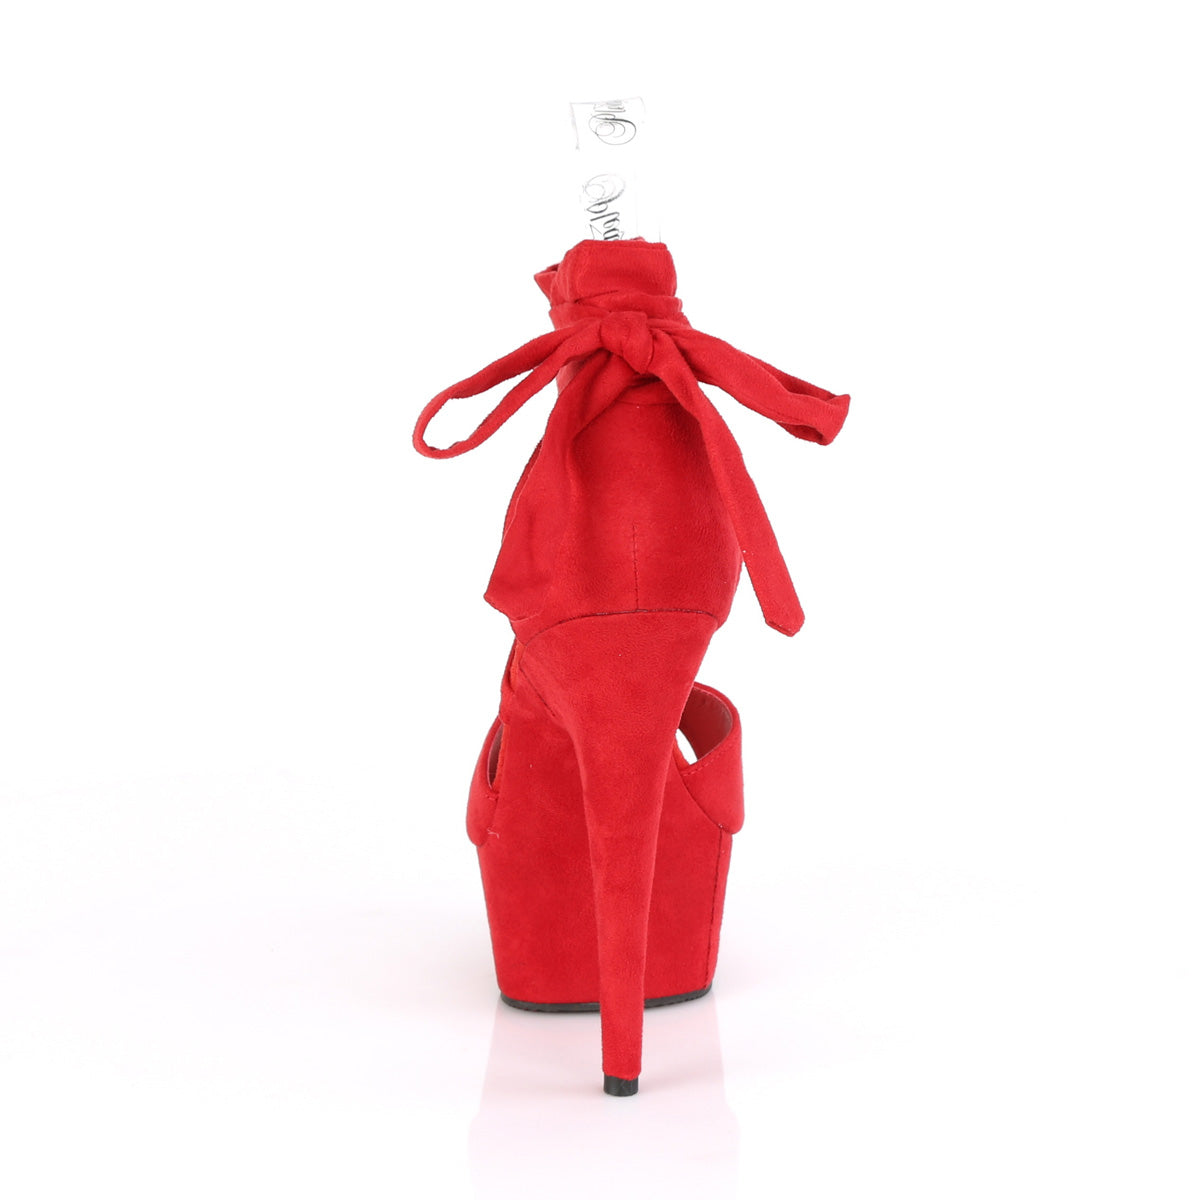 DELIGHT-679 Pleaser 6 Inch Heel Red Pole Dancing Platforms-Pleaser- Sexy Shoes Fetish Footwear